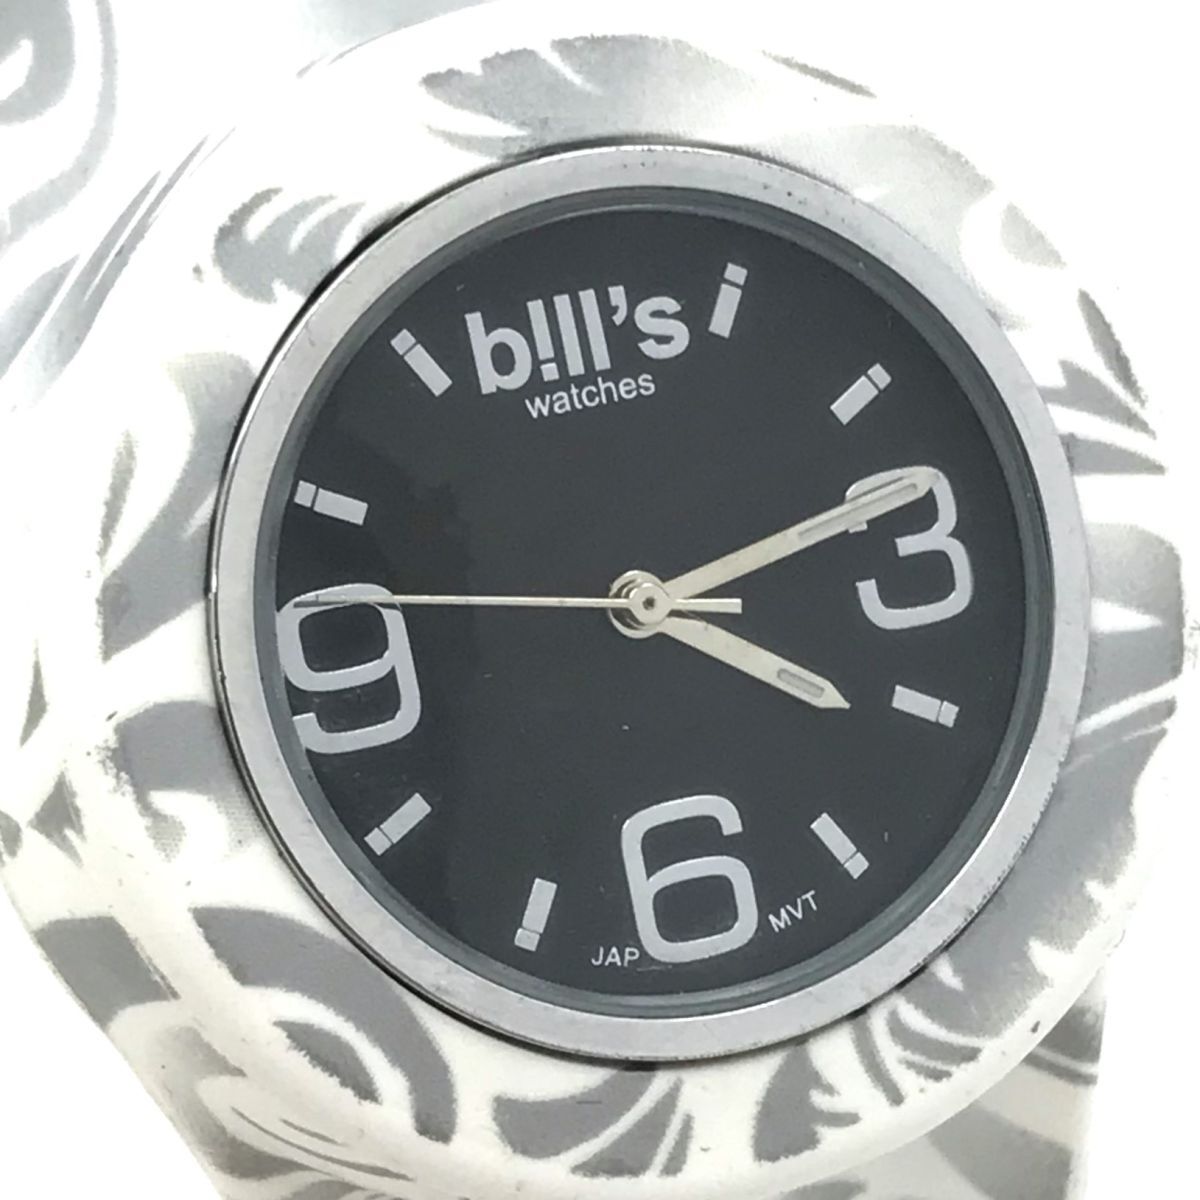 Bill's ビルズ b! 腕時計 クオーツ アナログ ラウンド ホワイト ブラック マーブル 植物 ウォッチ コレクション 電池交換済み 動作確認済みの画像1